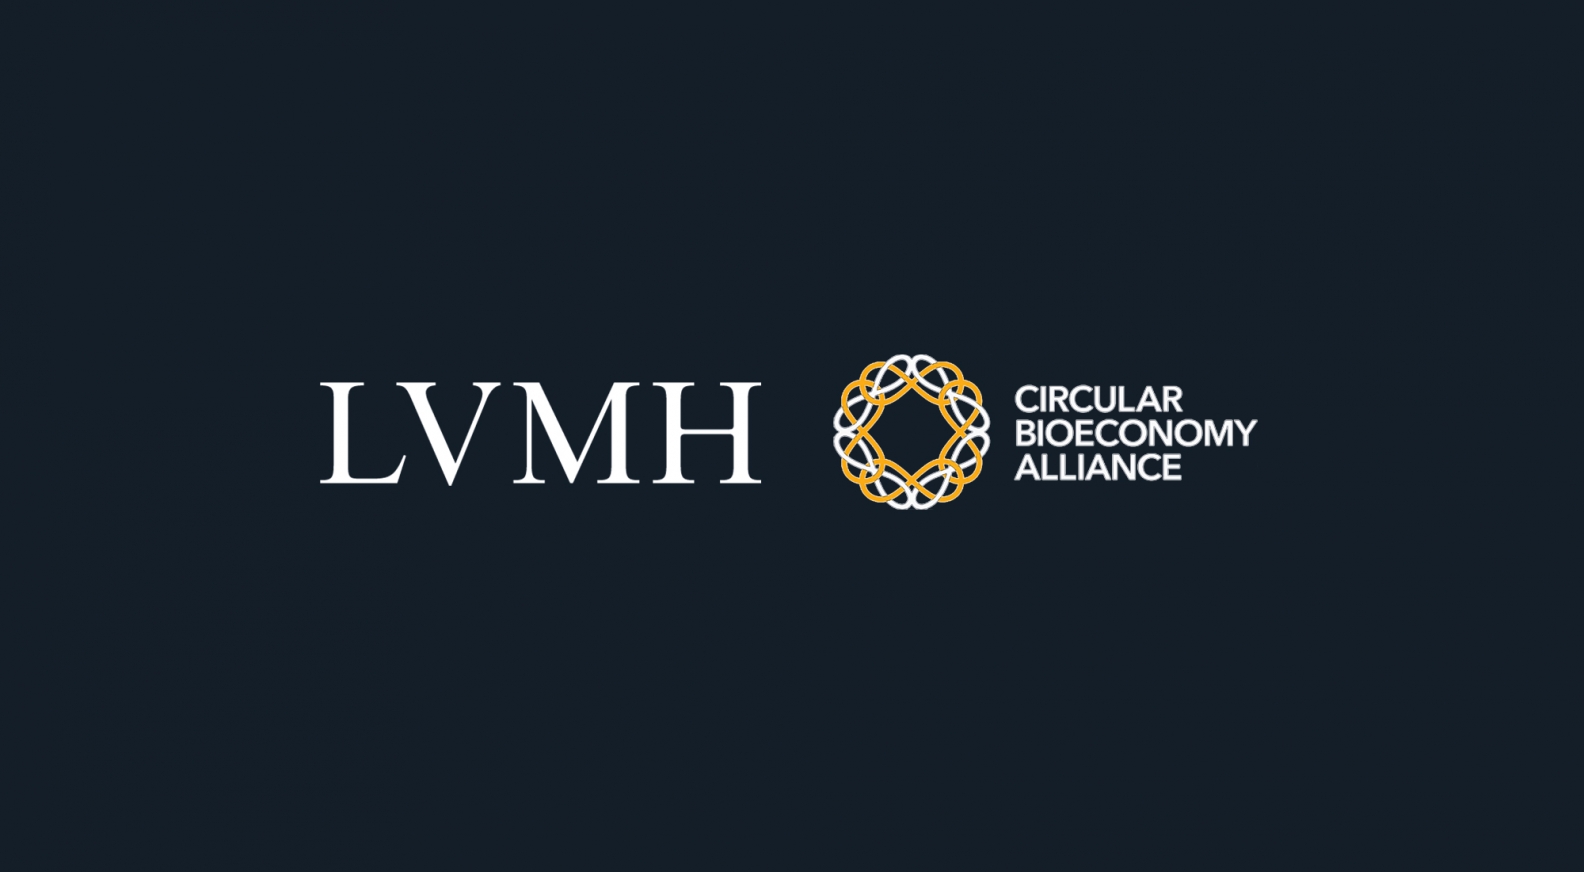 Economic news about LVMH